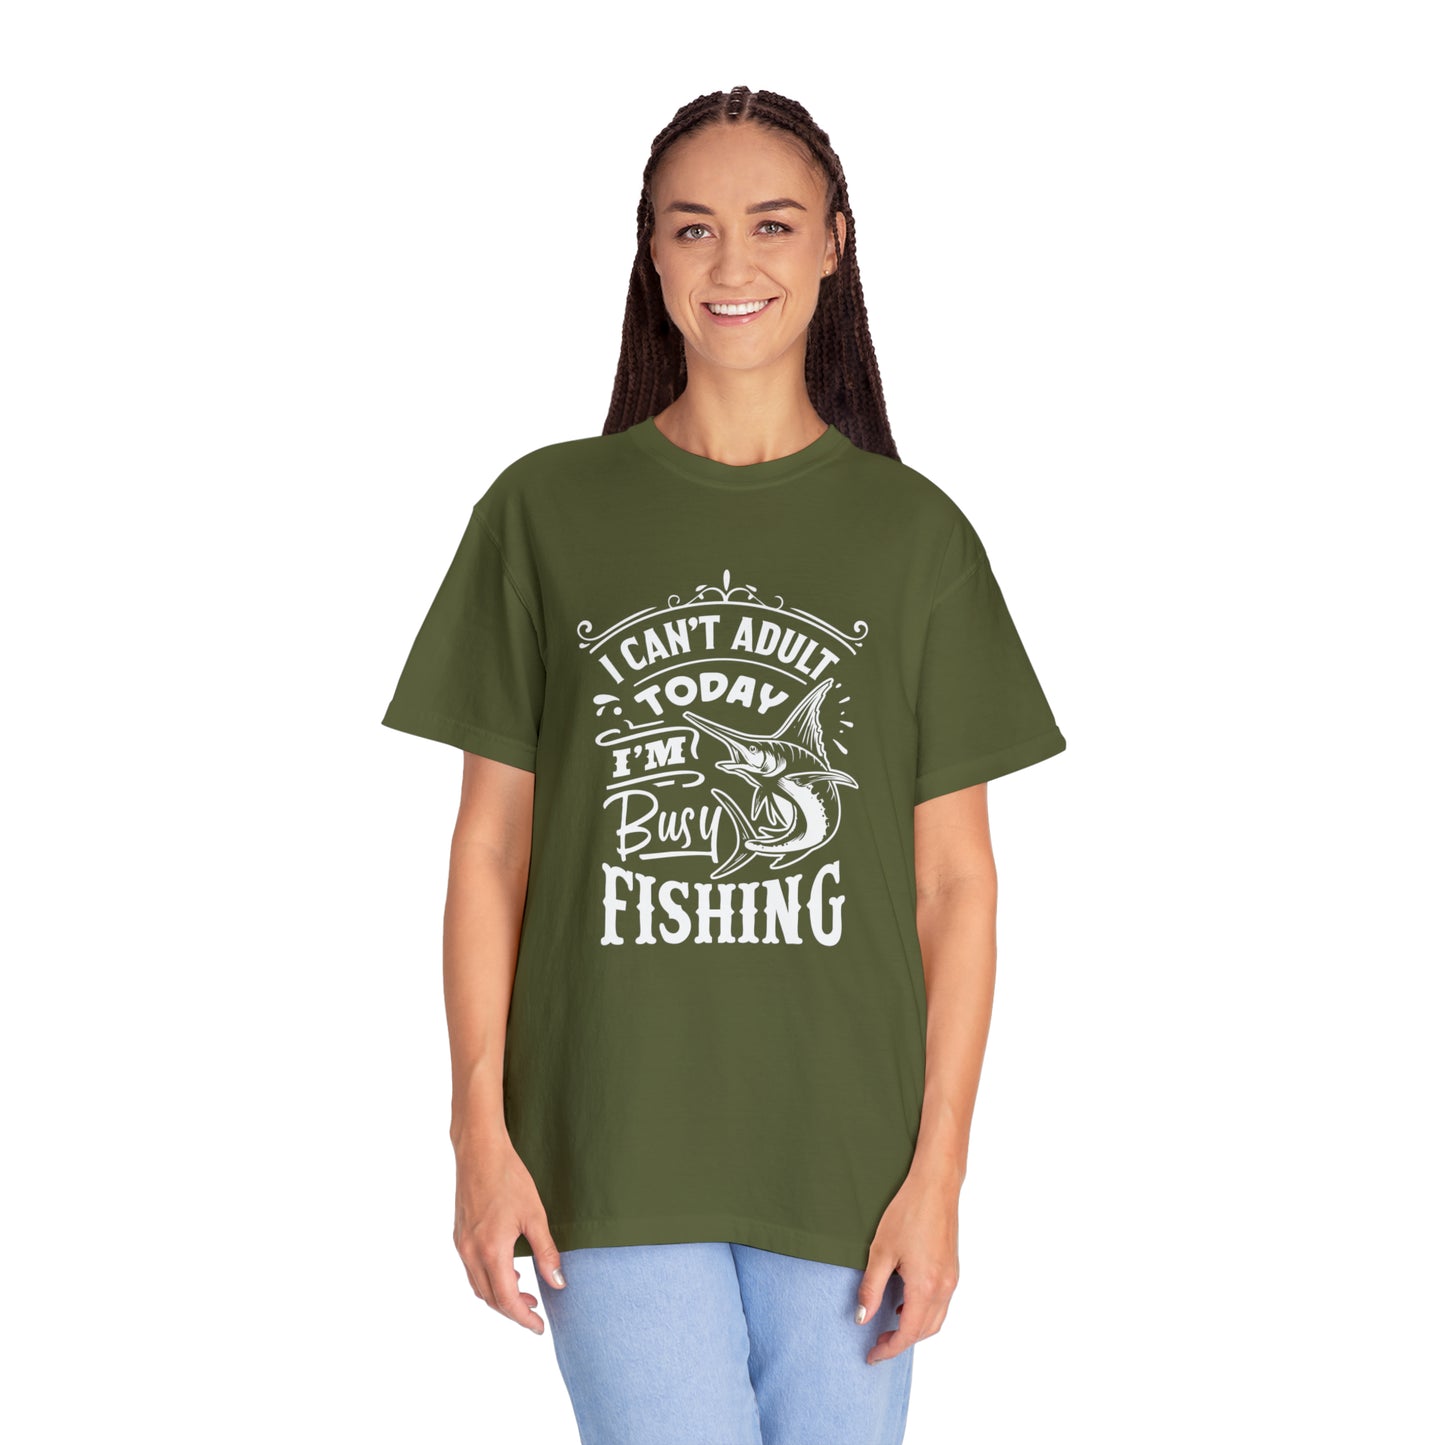 Camiseta "Hoy no soy adulto, estoy ocupado pescando"